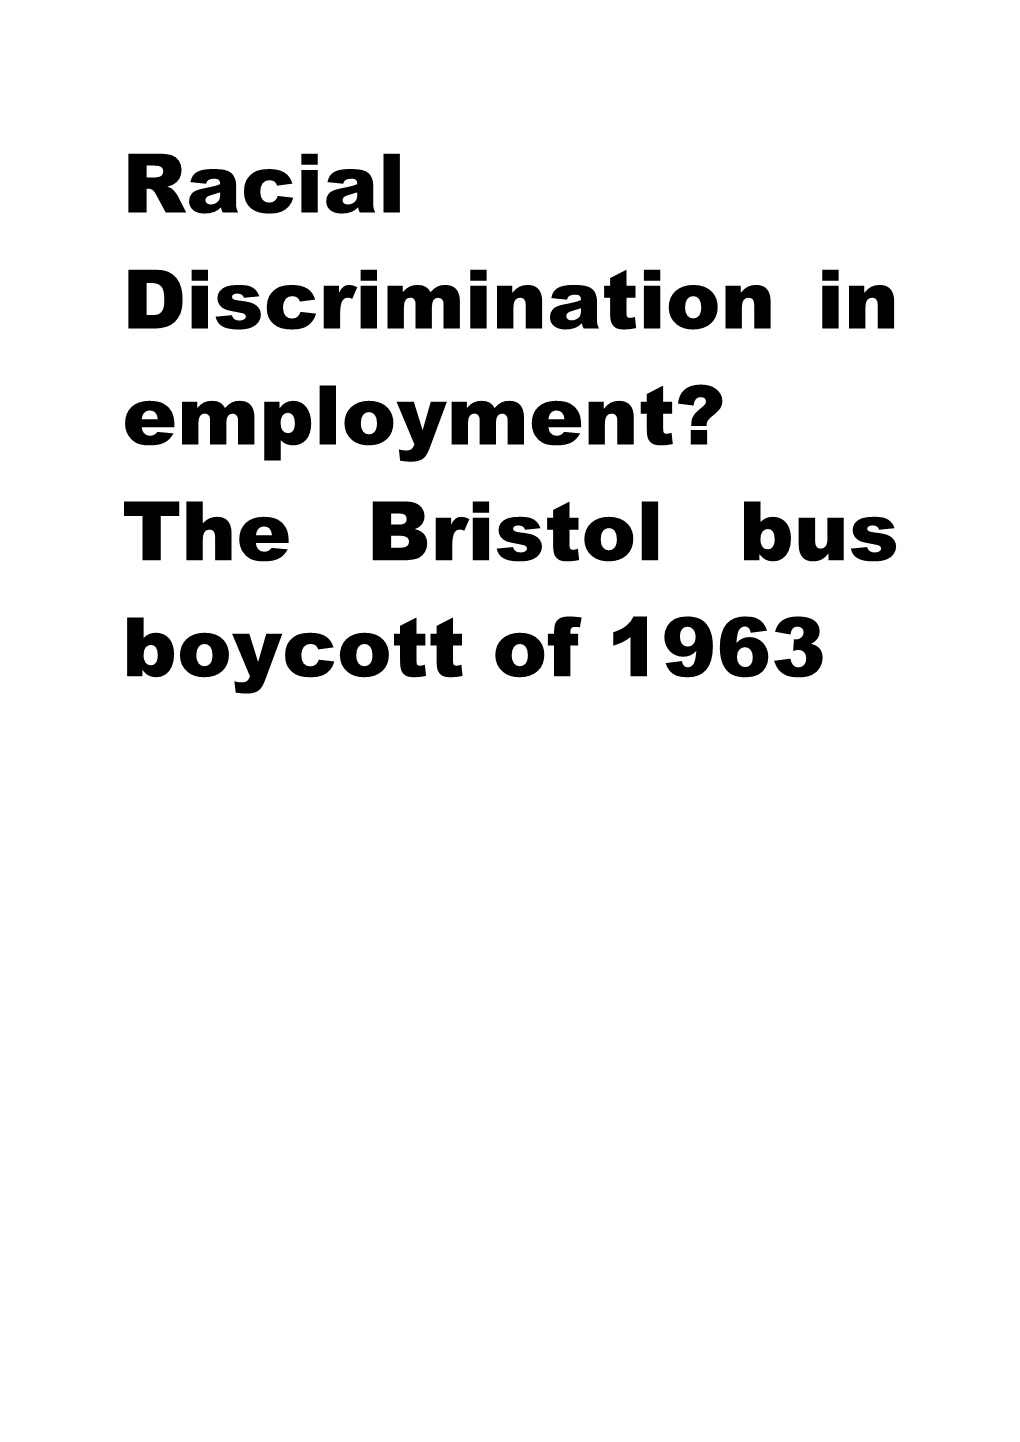 Racial Discrimination in Employment? the Bristol Bus Boycott of 1963